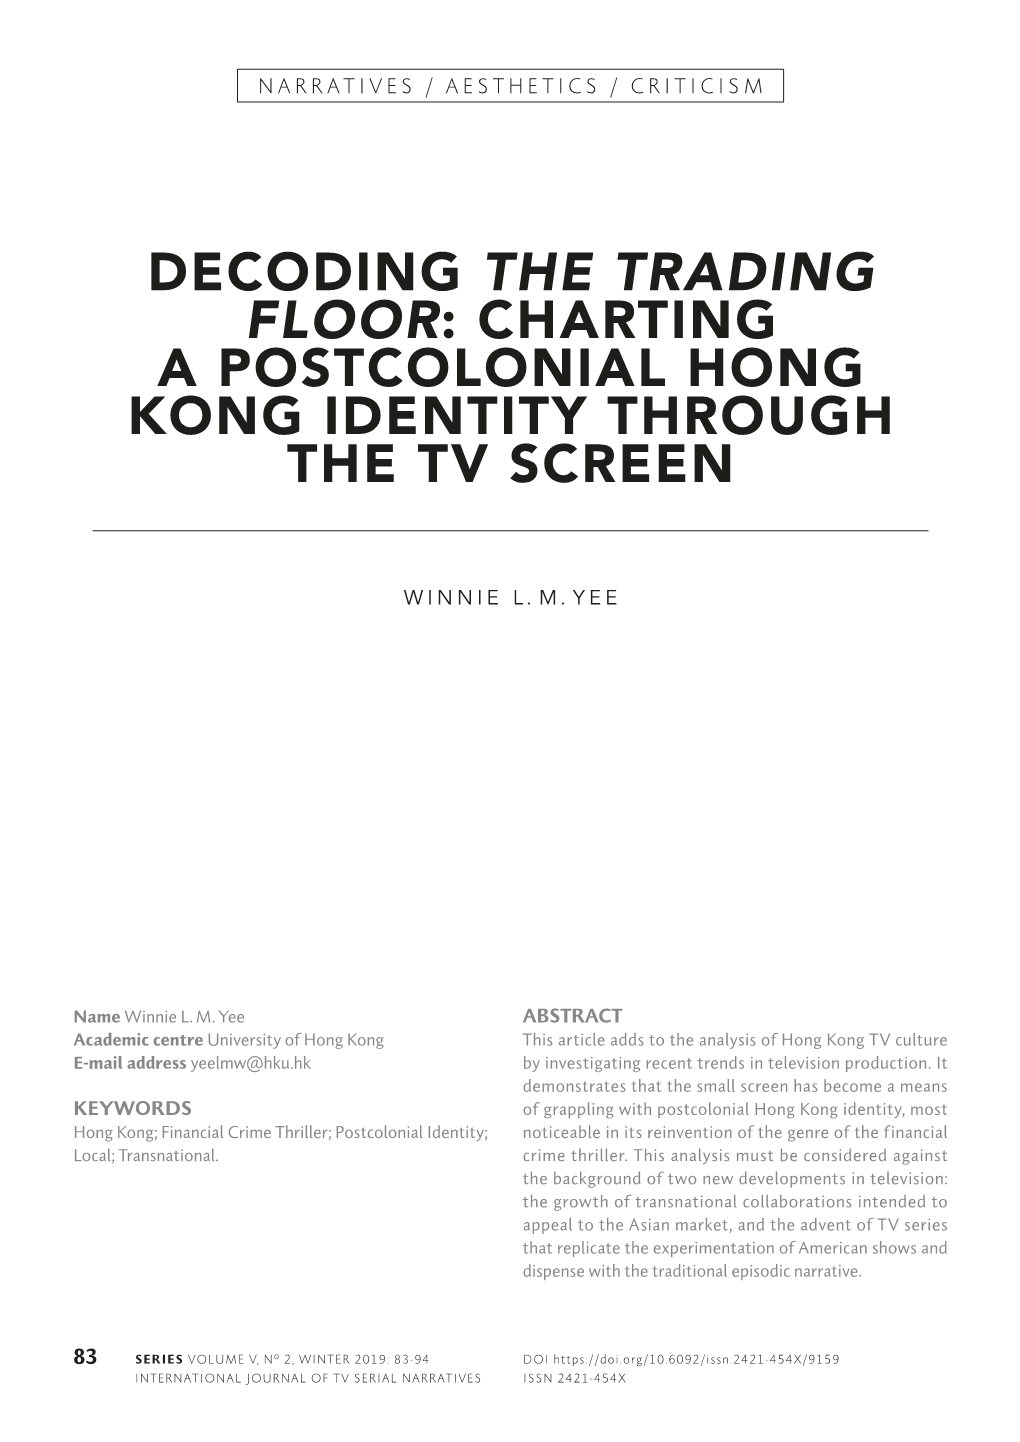 Charting a Postcolonial Hong Kong Identity Through the Tv Screen